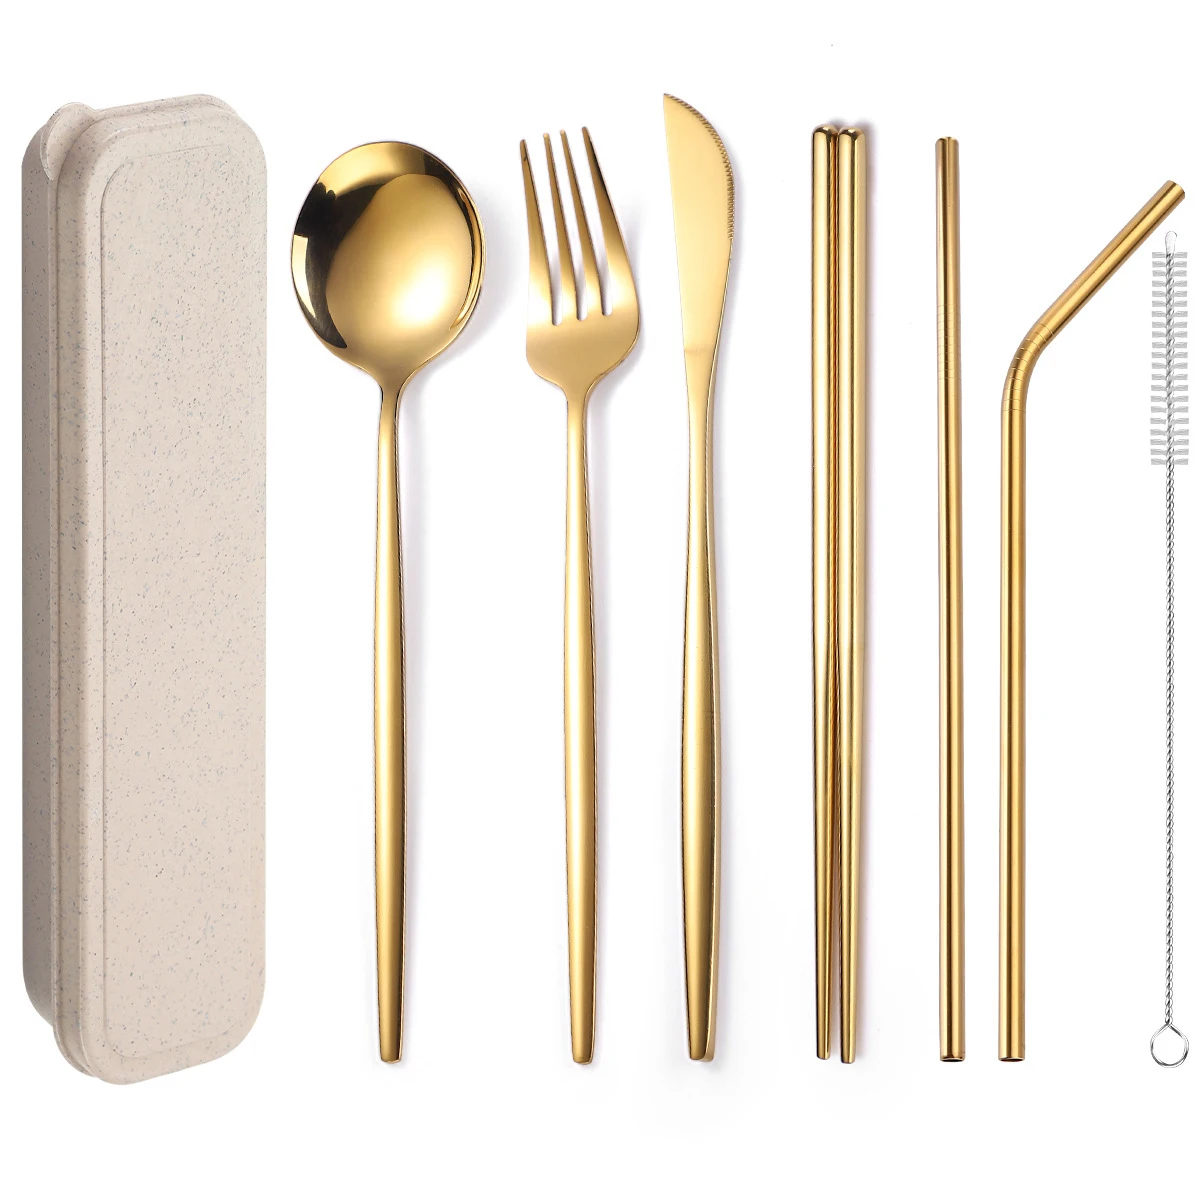 

7PCS Portable Travel Camping Tableware Cutlery Set Knife Fork Spoon Chopsticks Dinnerware Stainless Steel Flatware Utensils Set